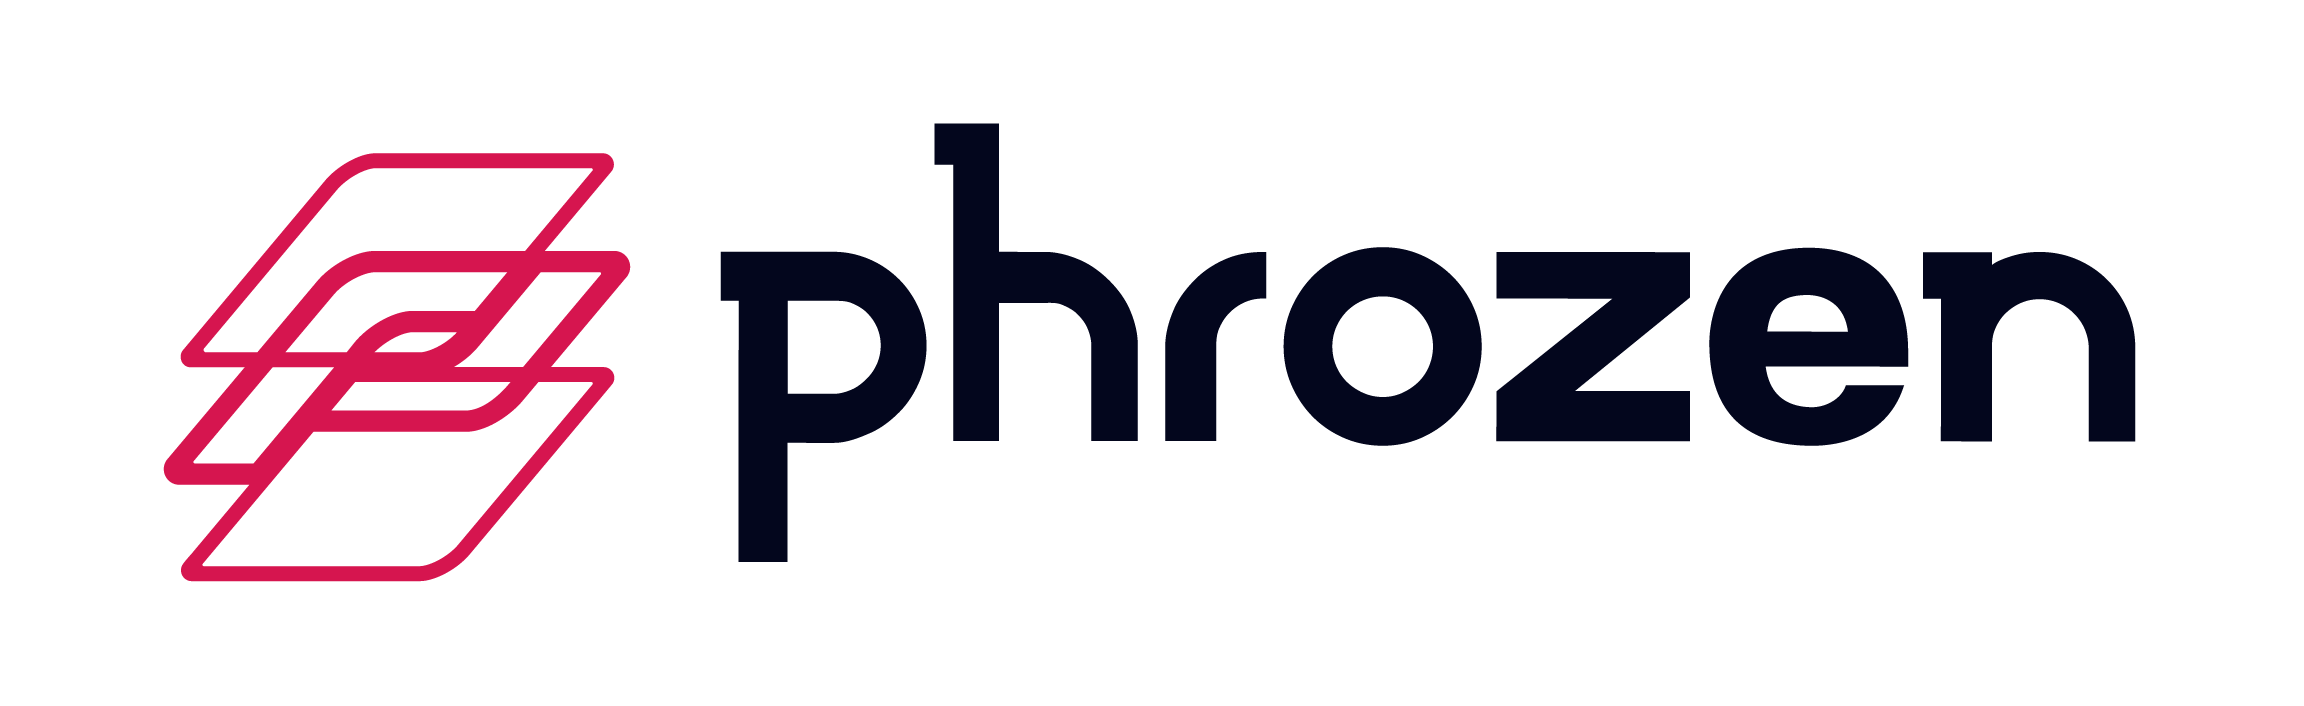 phrozen logo